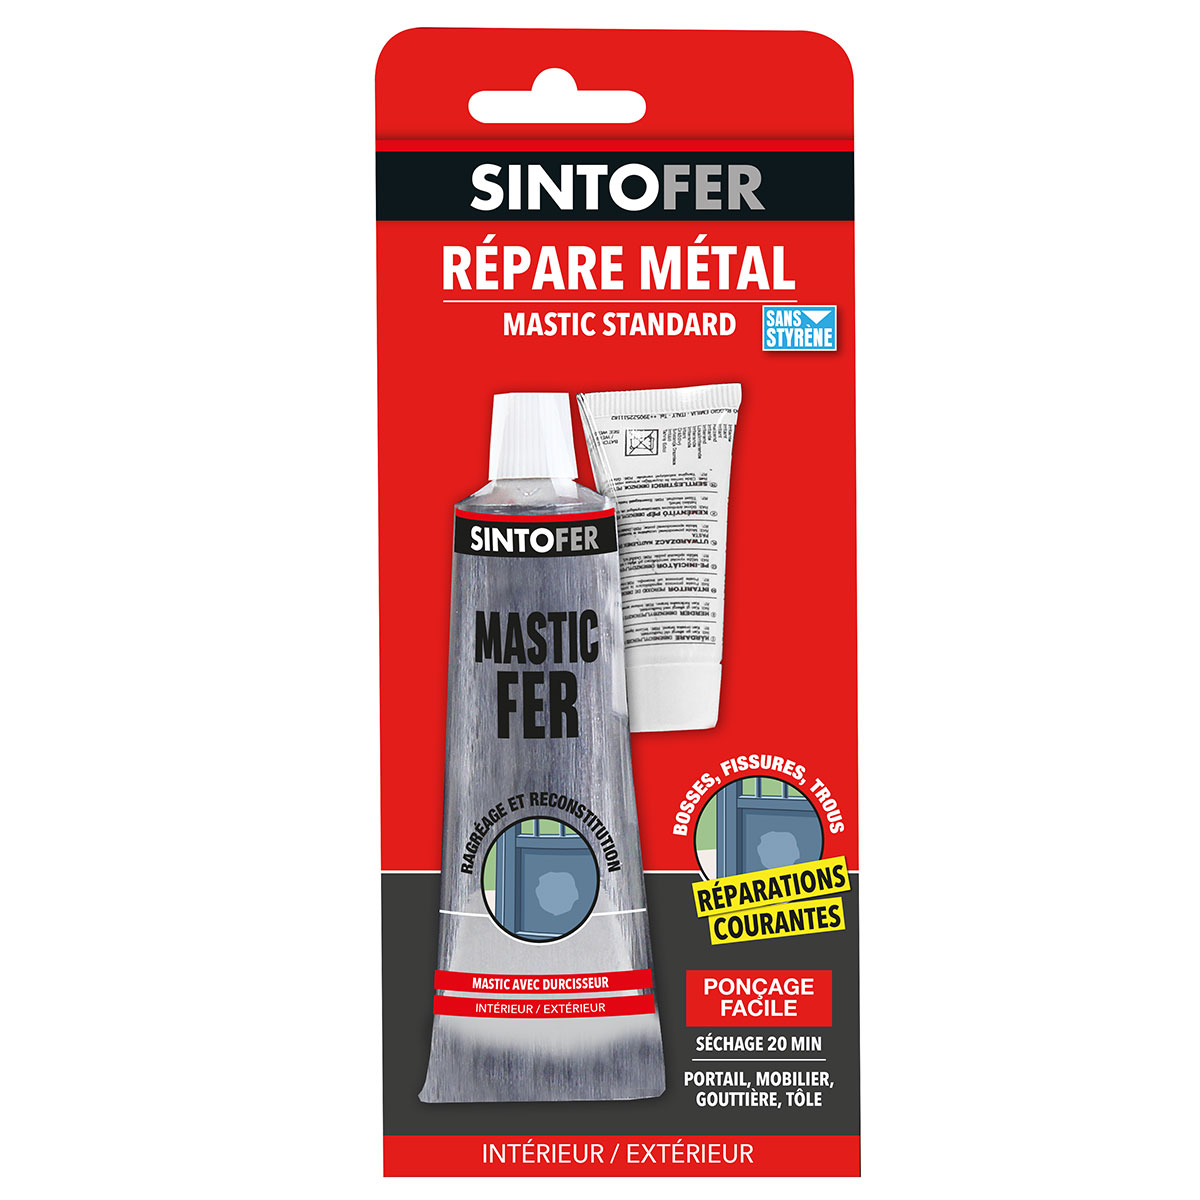 Répare métal armé – Sintofer